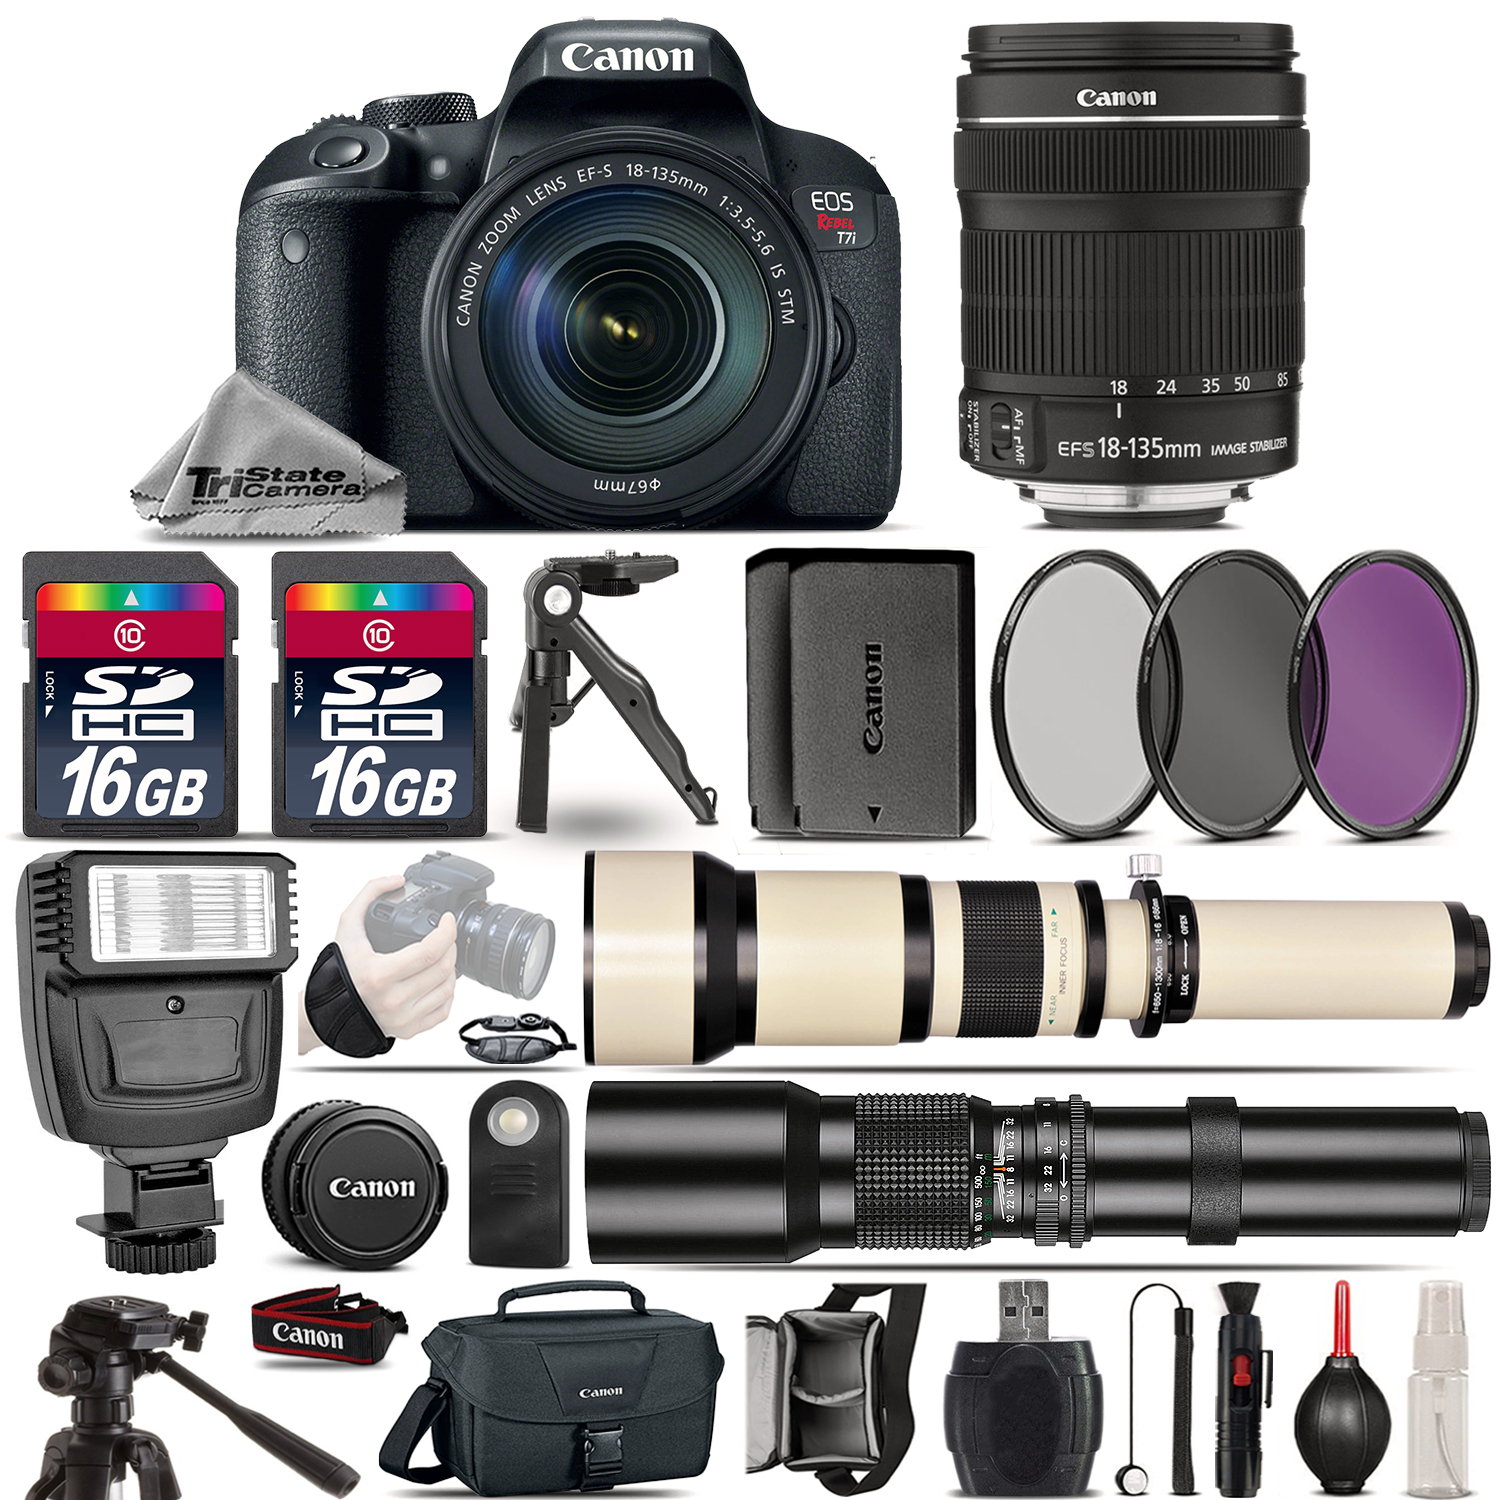 EOS Rebel T7i DSLR Camera + 18-135mm +650-1300mm +500mm +EXT BAT -32GB Kit *FREE SHIPPING*